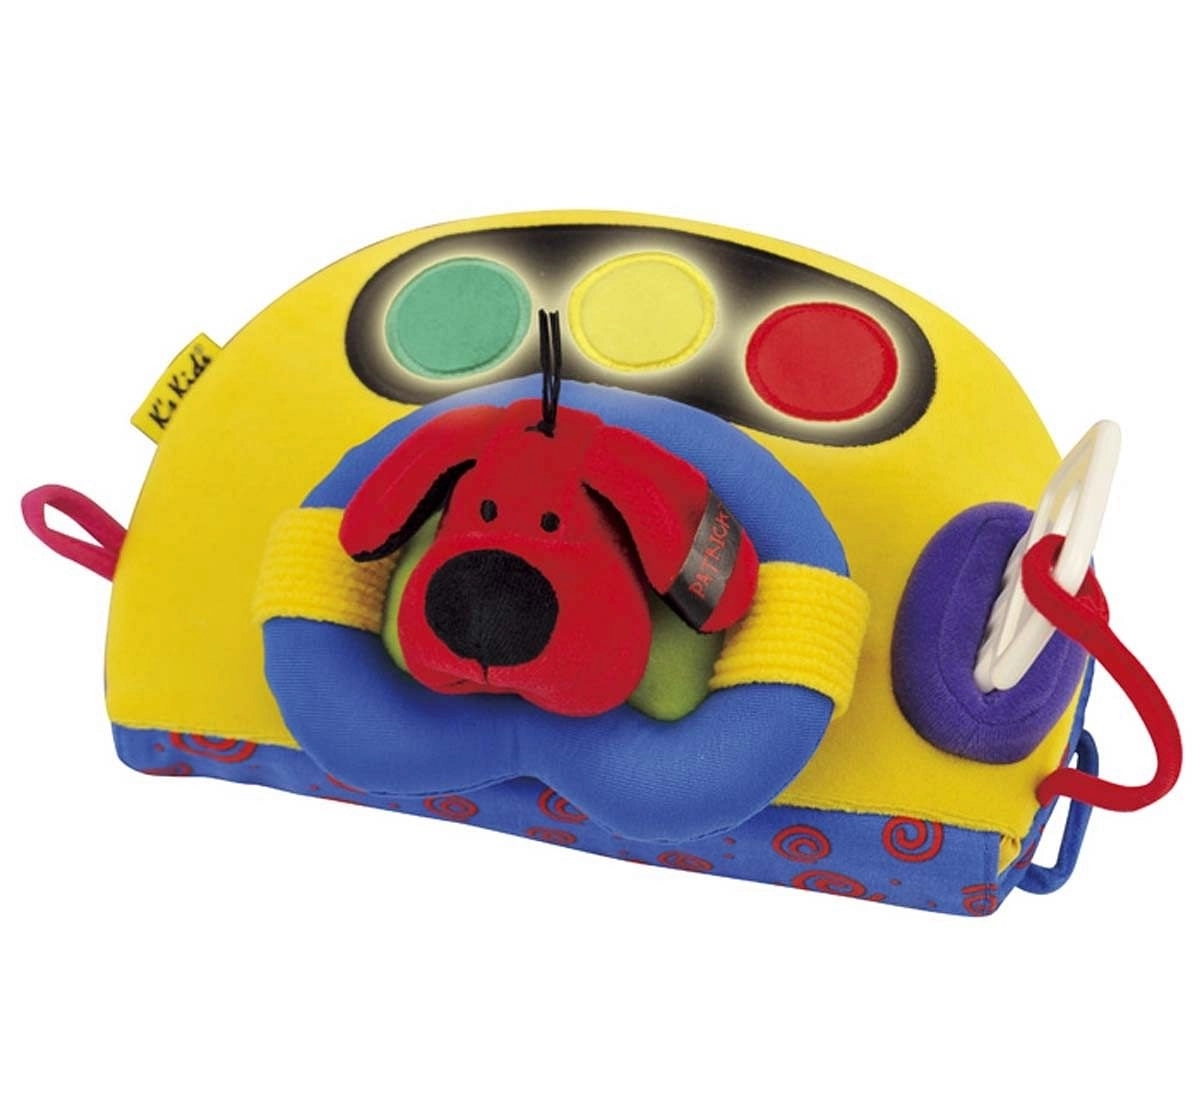 K'S Kids Jumbo Go Early Learner Toys for Kids age 9M+ 